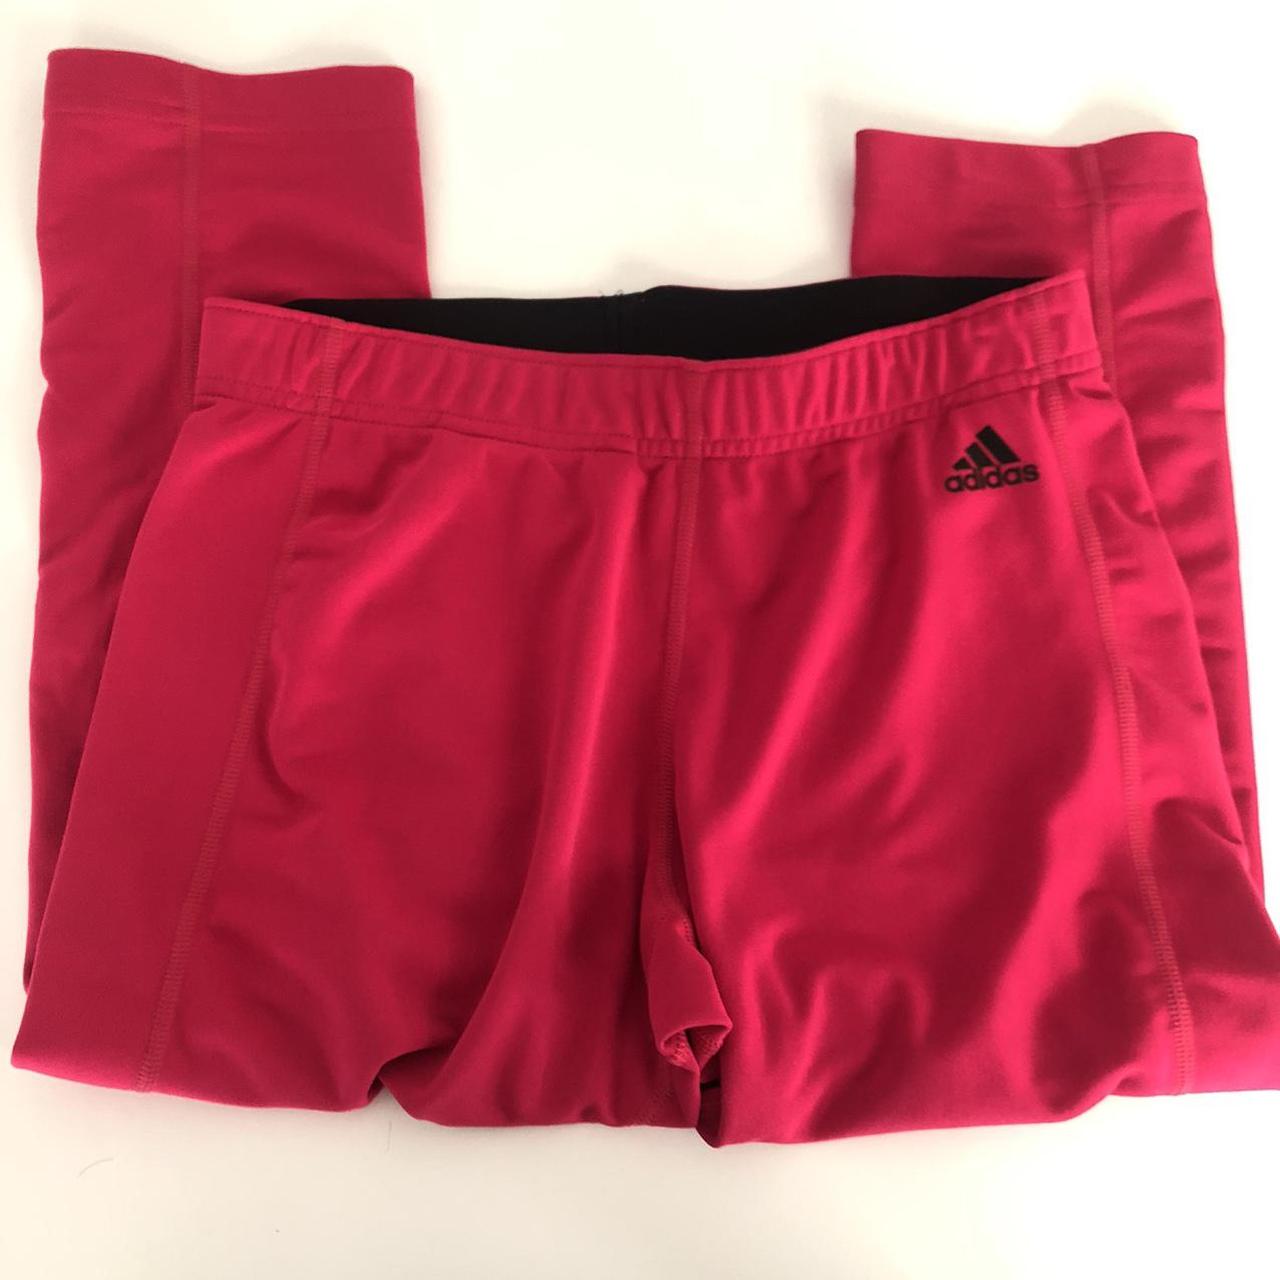 Product Image 2 - Adidas Climalite Hot Pink Workout